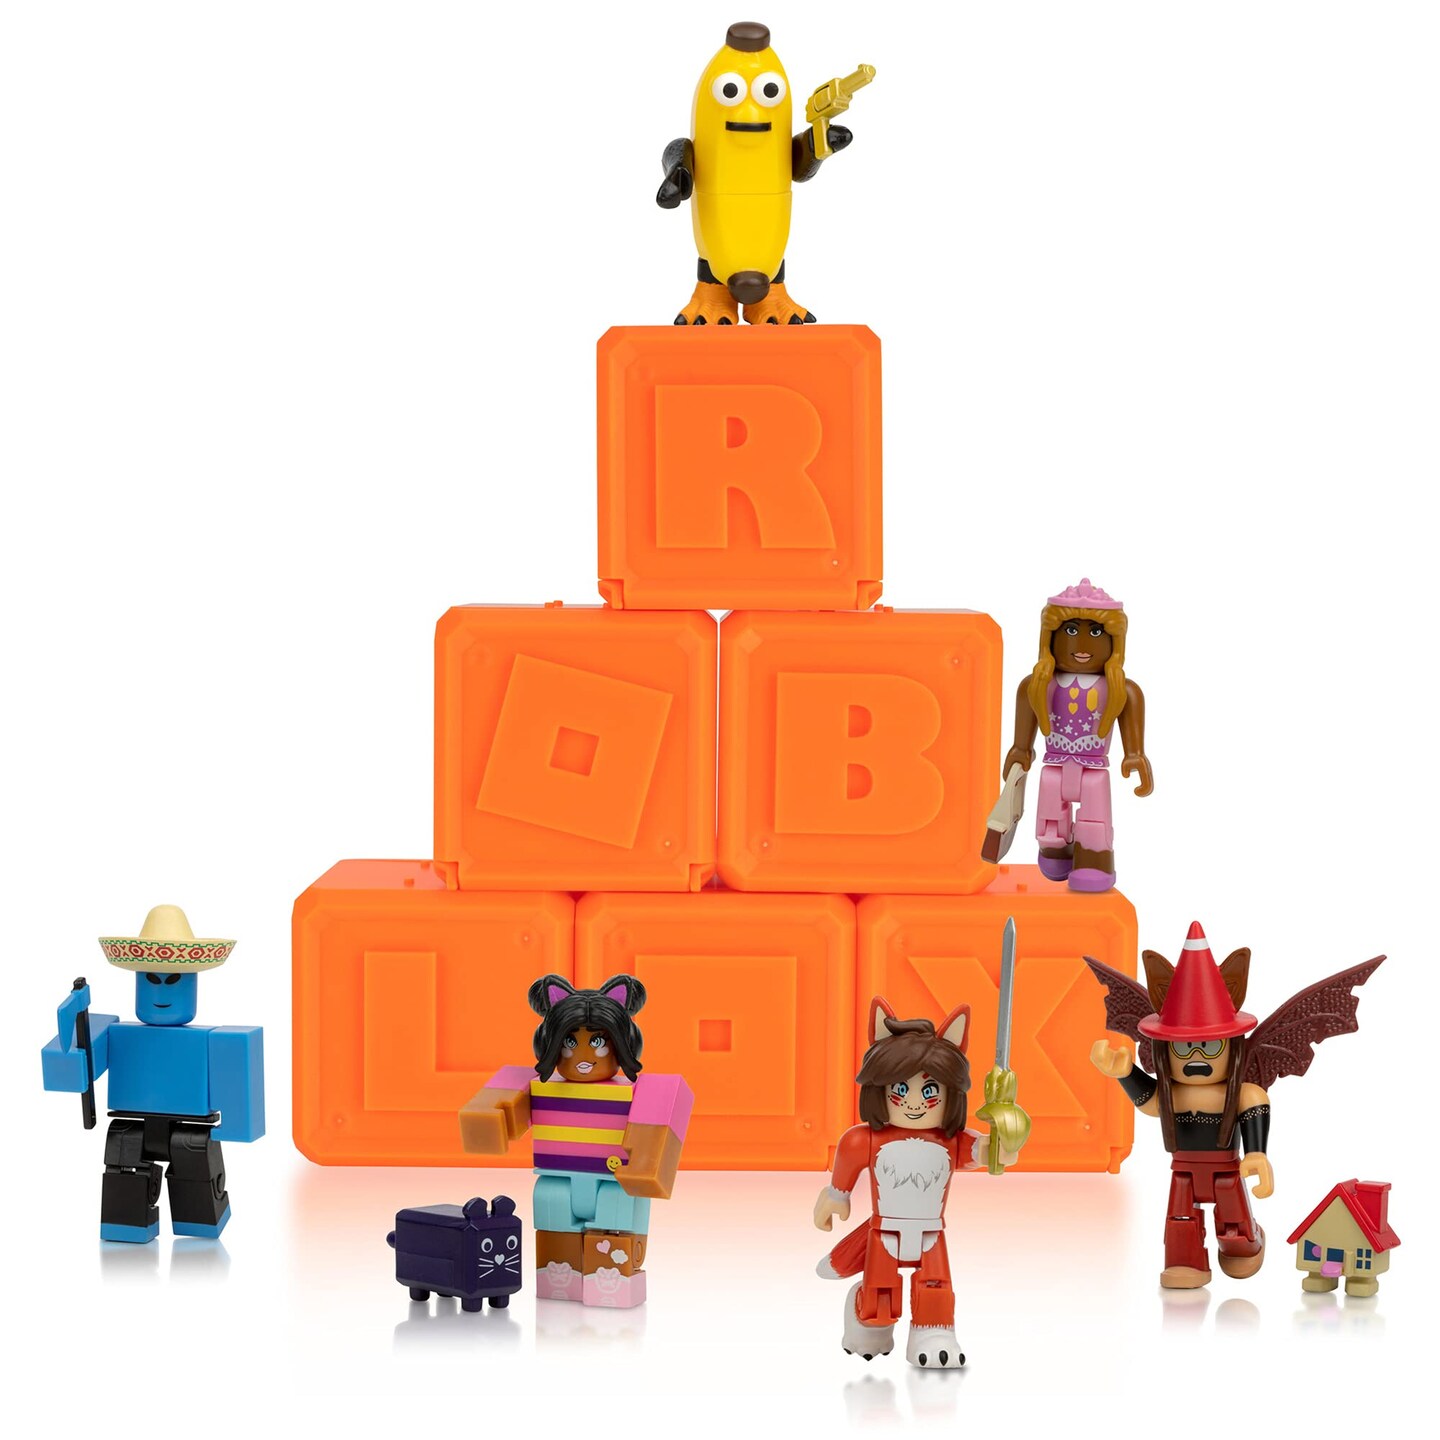 Roblox LEGO Games LEGO Toys